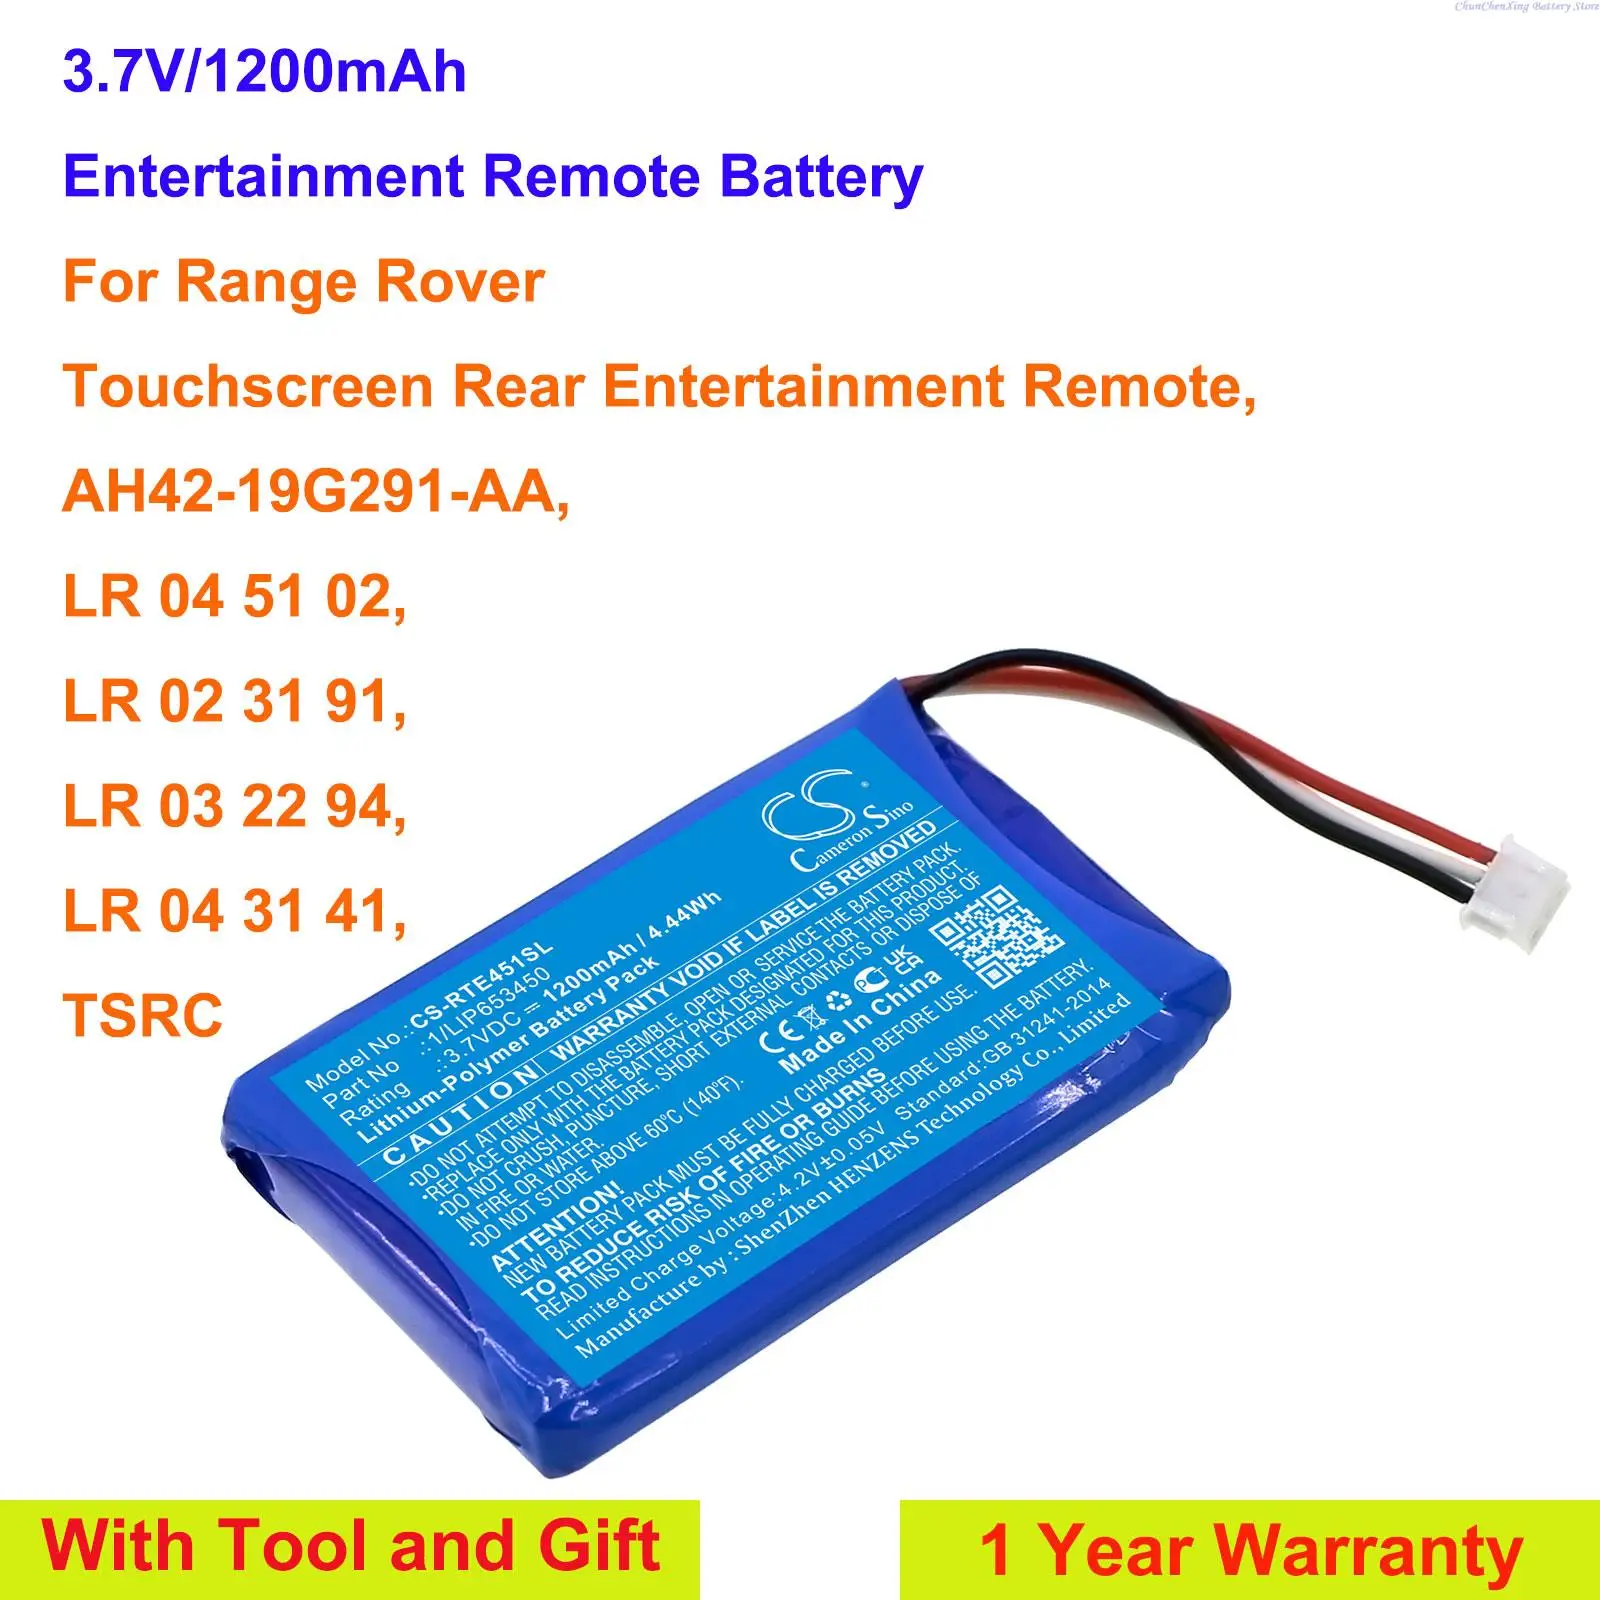 

1200mAh Battery for Range Rover Touchscreen Rear Entertainment Remote, LR 04 51 02, LR 02 31 91, LR 03 22 94, TSRC